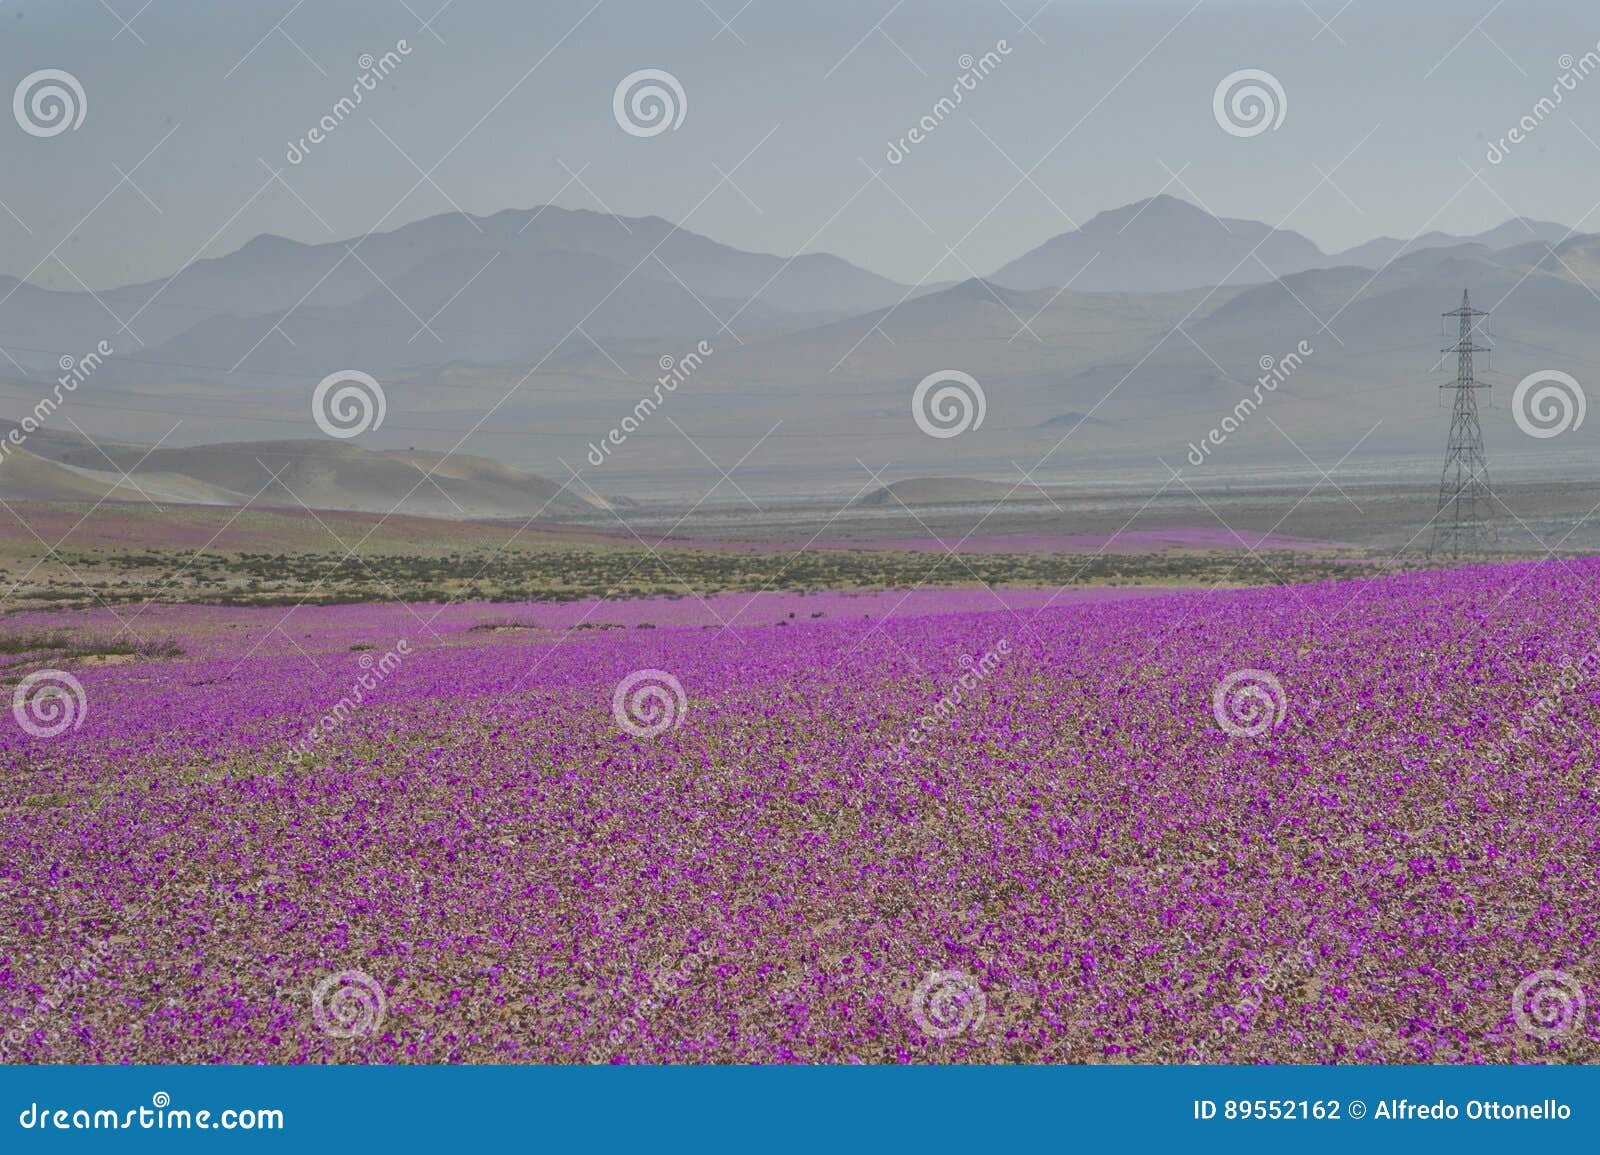 flowers in the atacama desert, chile.